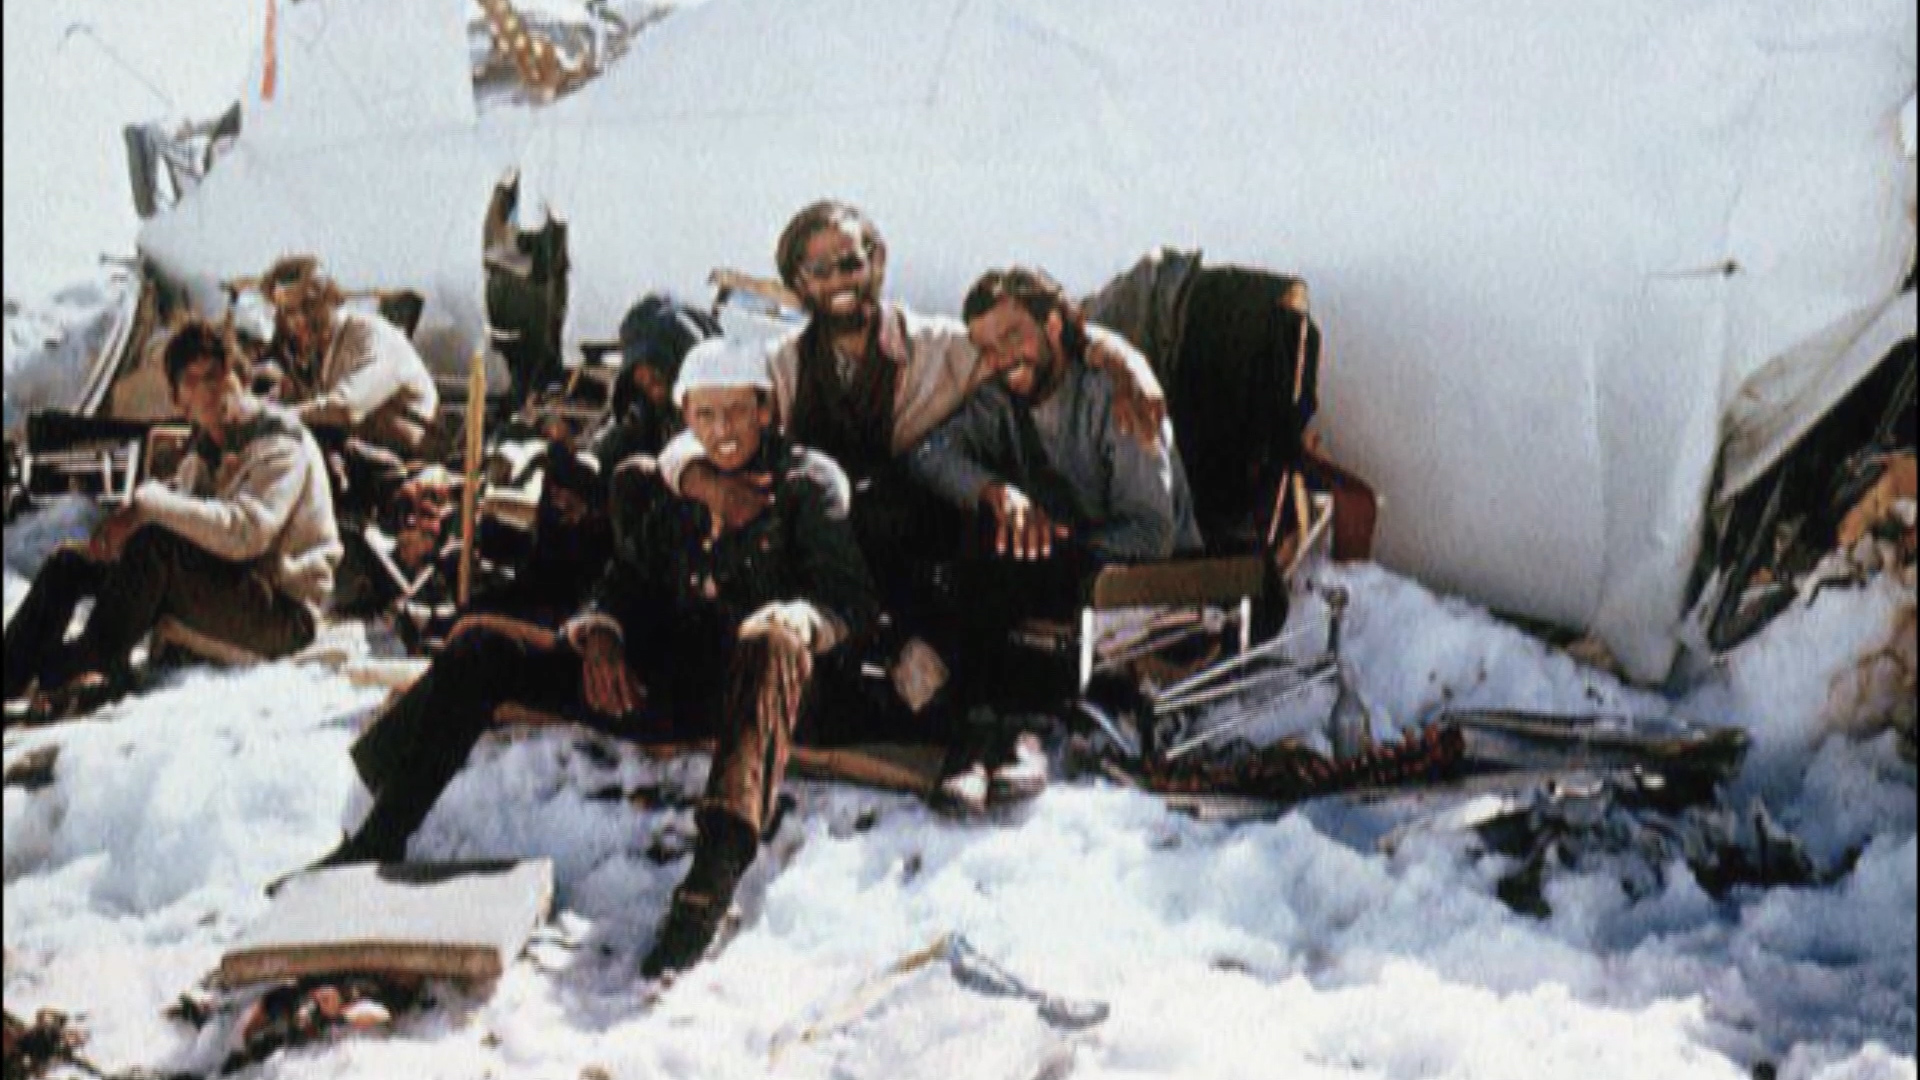 Survivor of 1972 Andes Plane Crash Recounts Being Forced Into